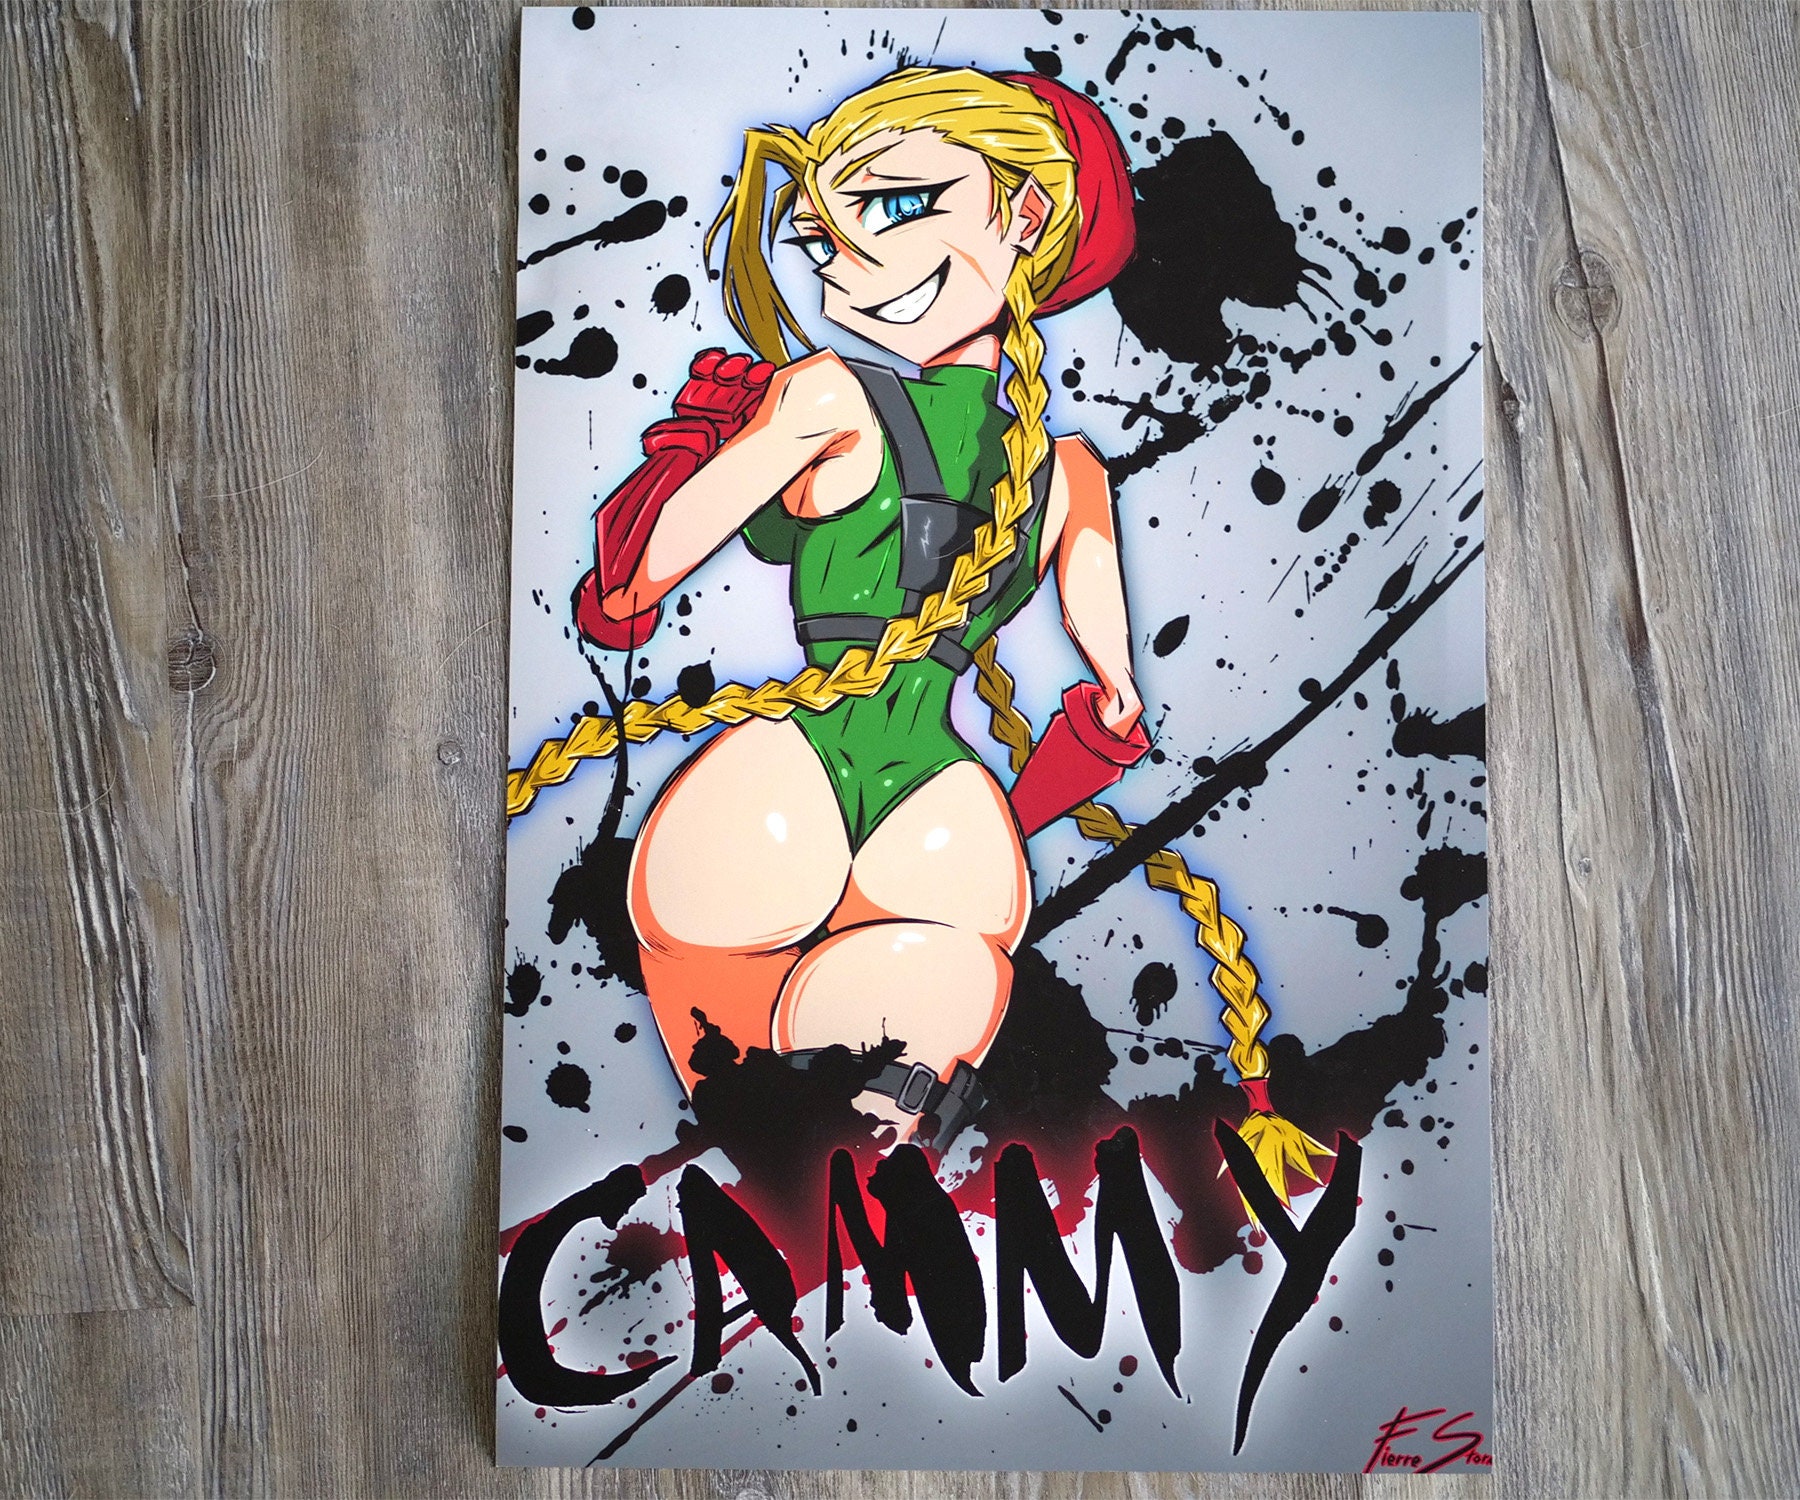 CAMMY STREET FIGHTER 6 (JACKET), an art print by darkusomega - INPRNT